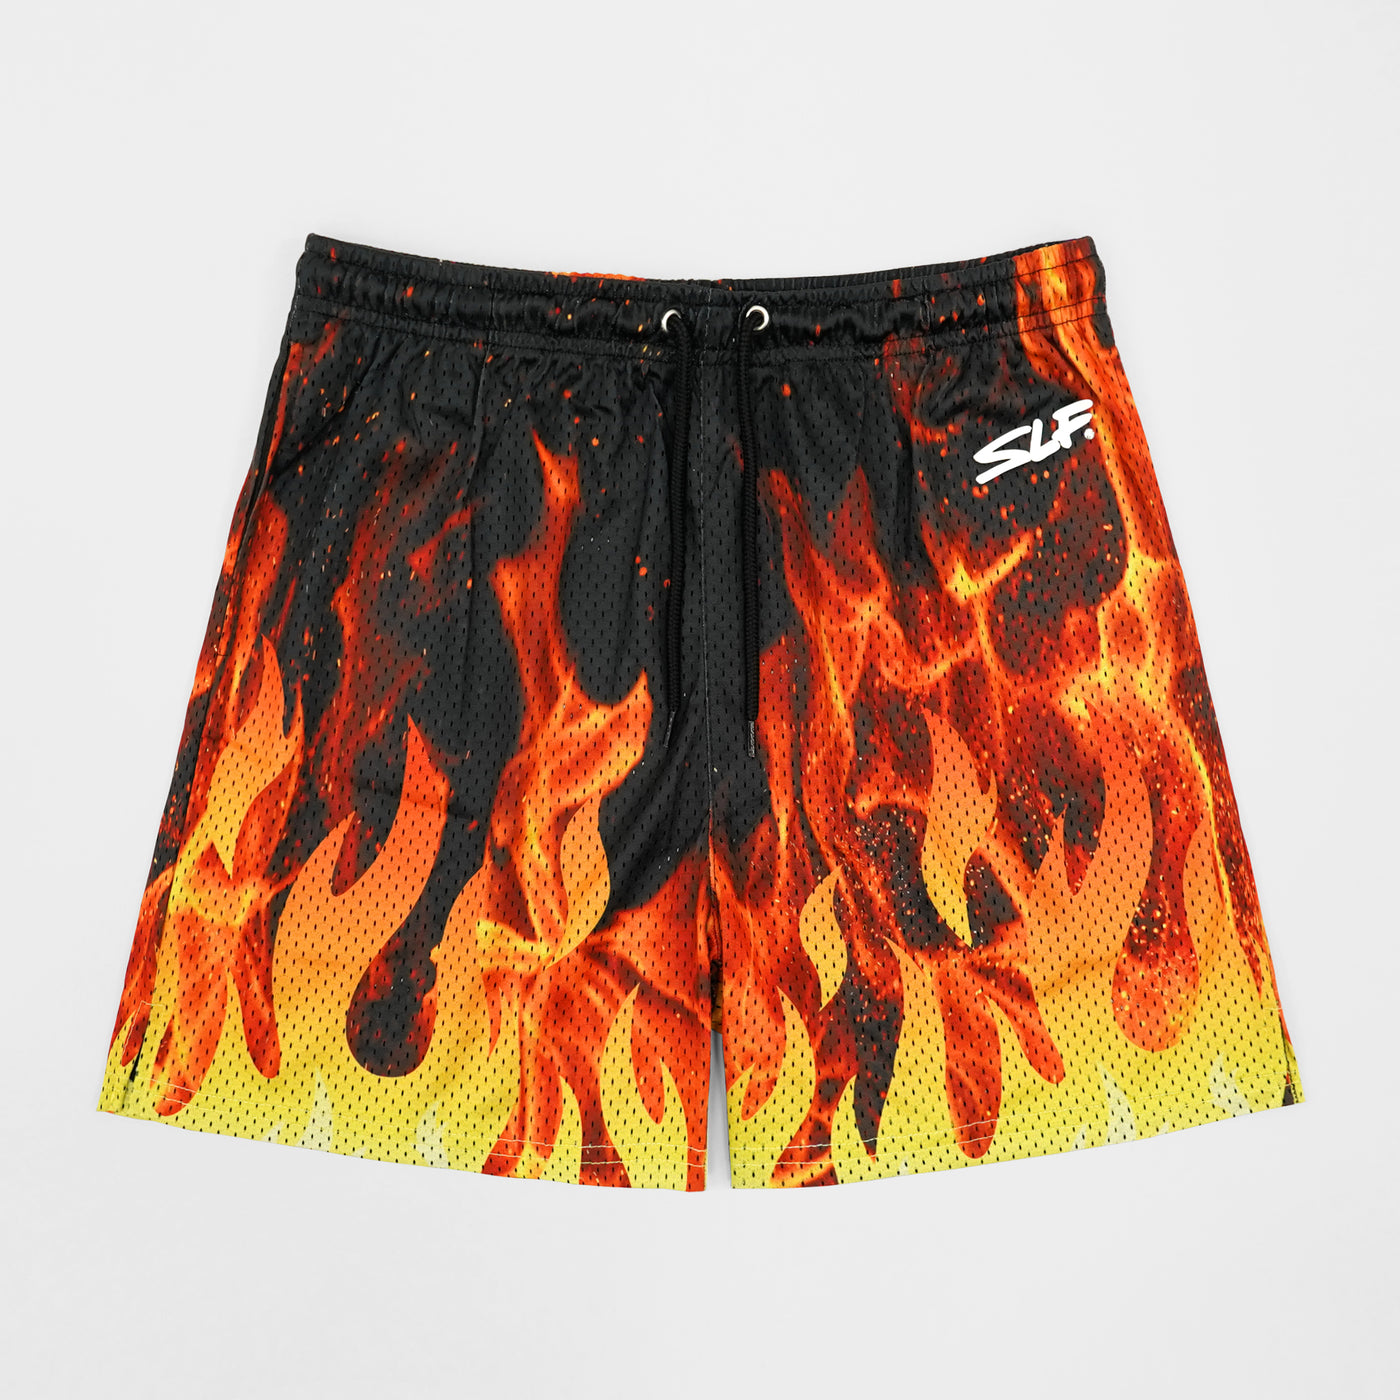 Black Fire Shorts - 7"